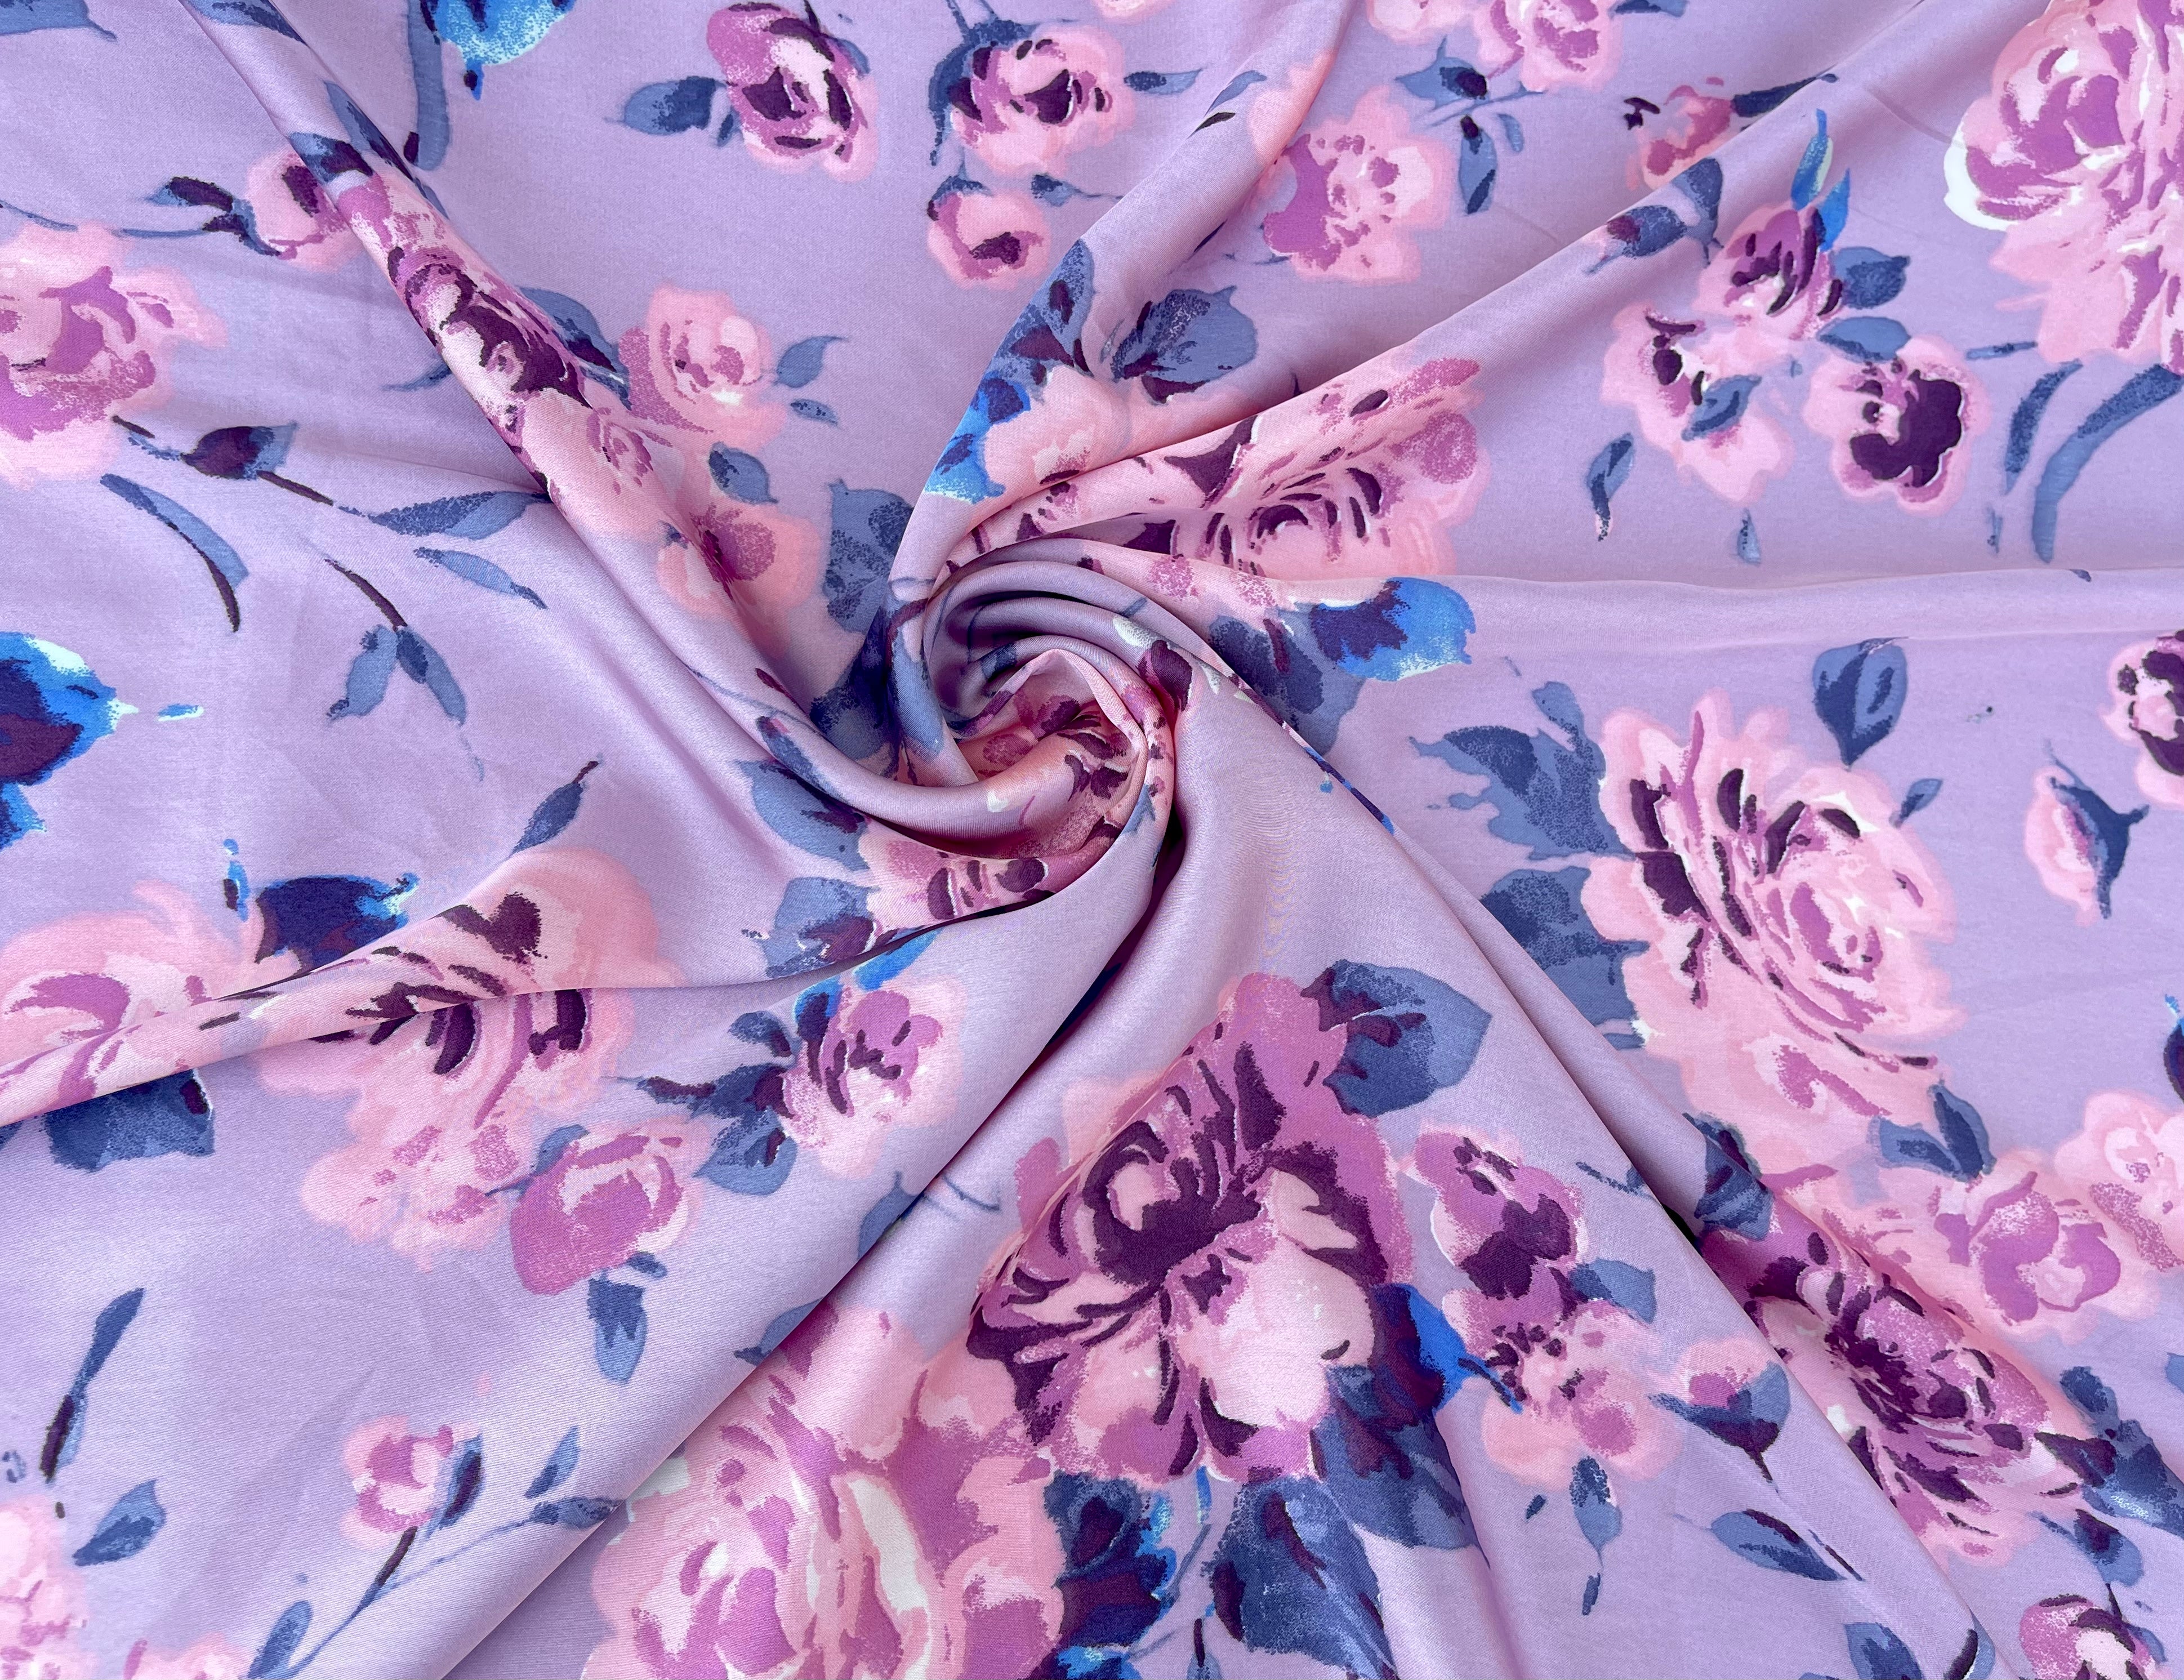 Purple Satin Fabric for Lining - Light Weight